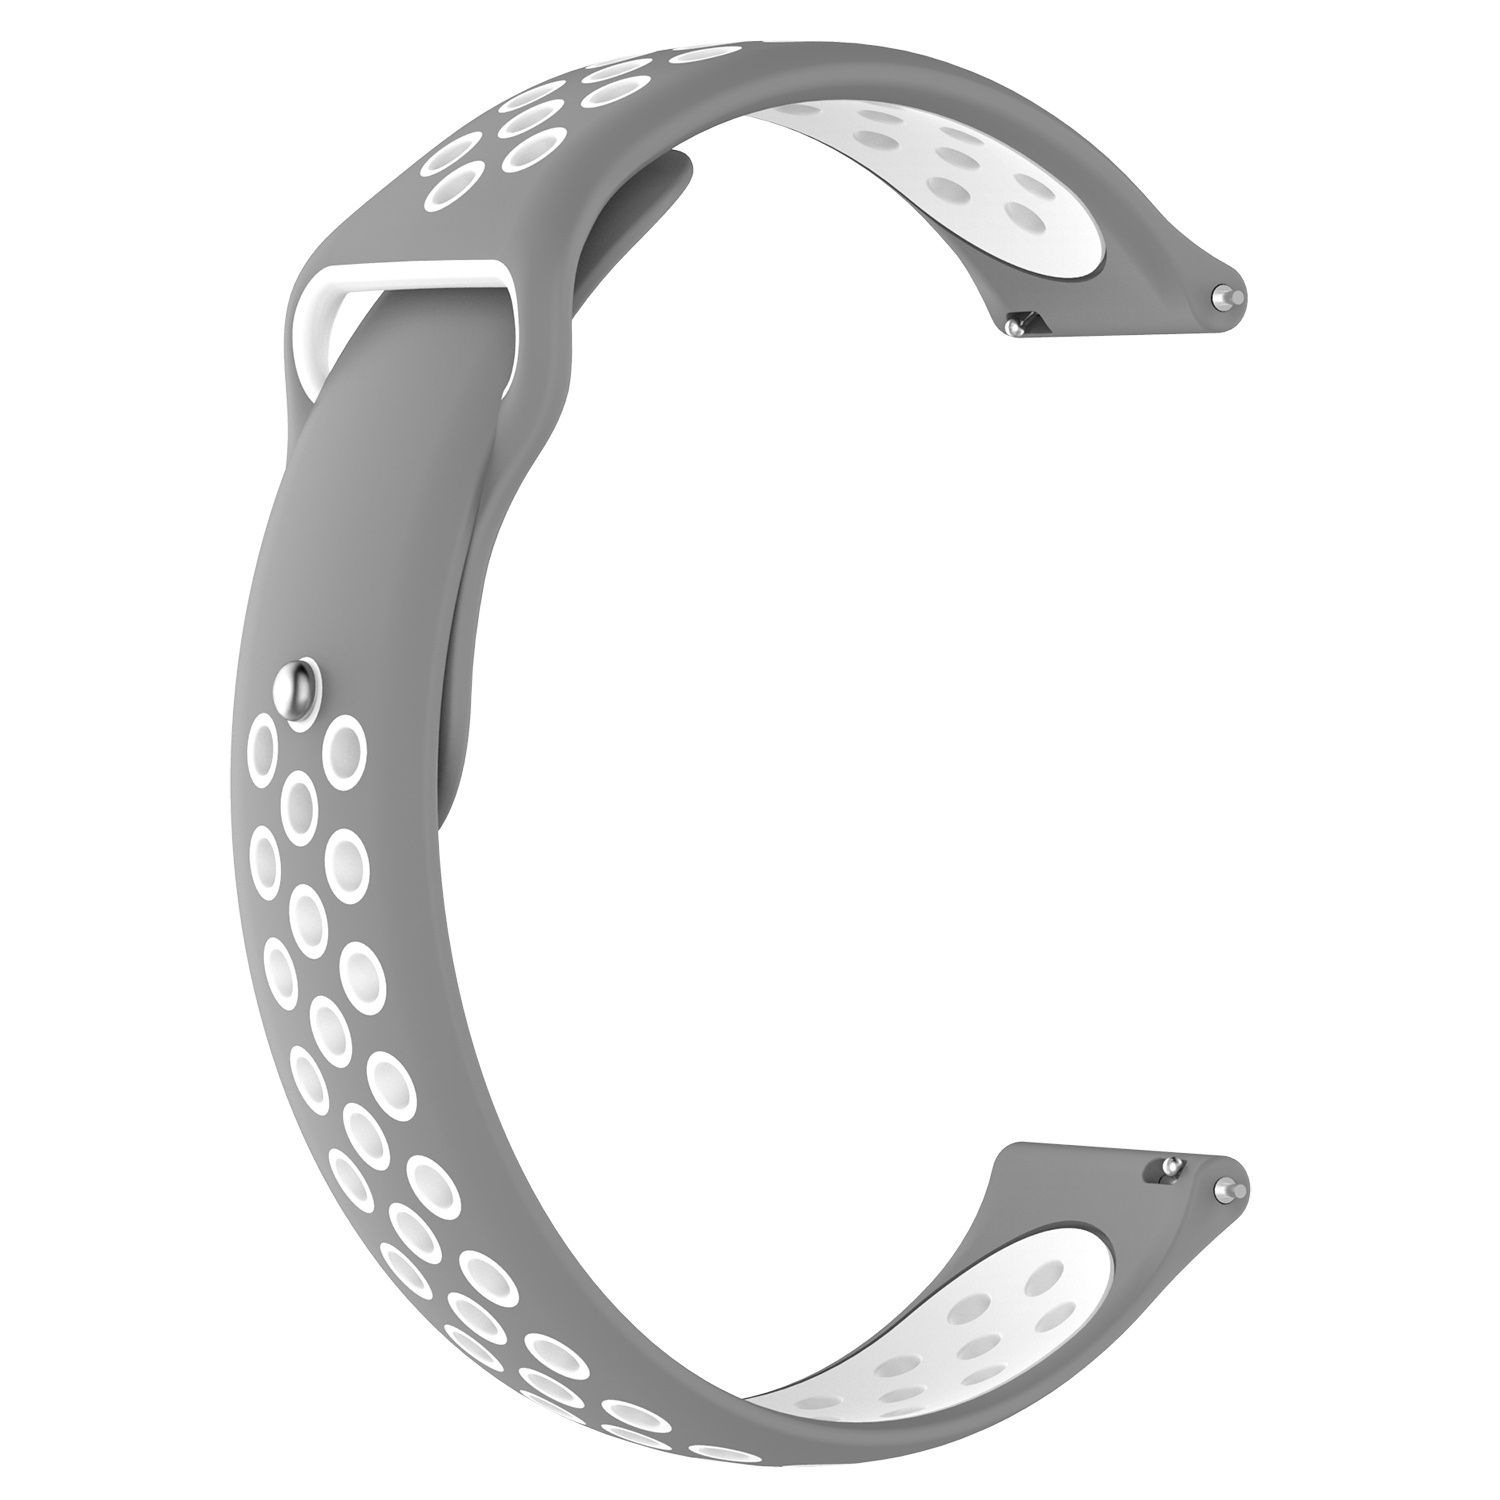 Huawei Watch GT dupla sport szalag - szürke fehér